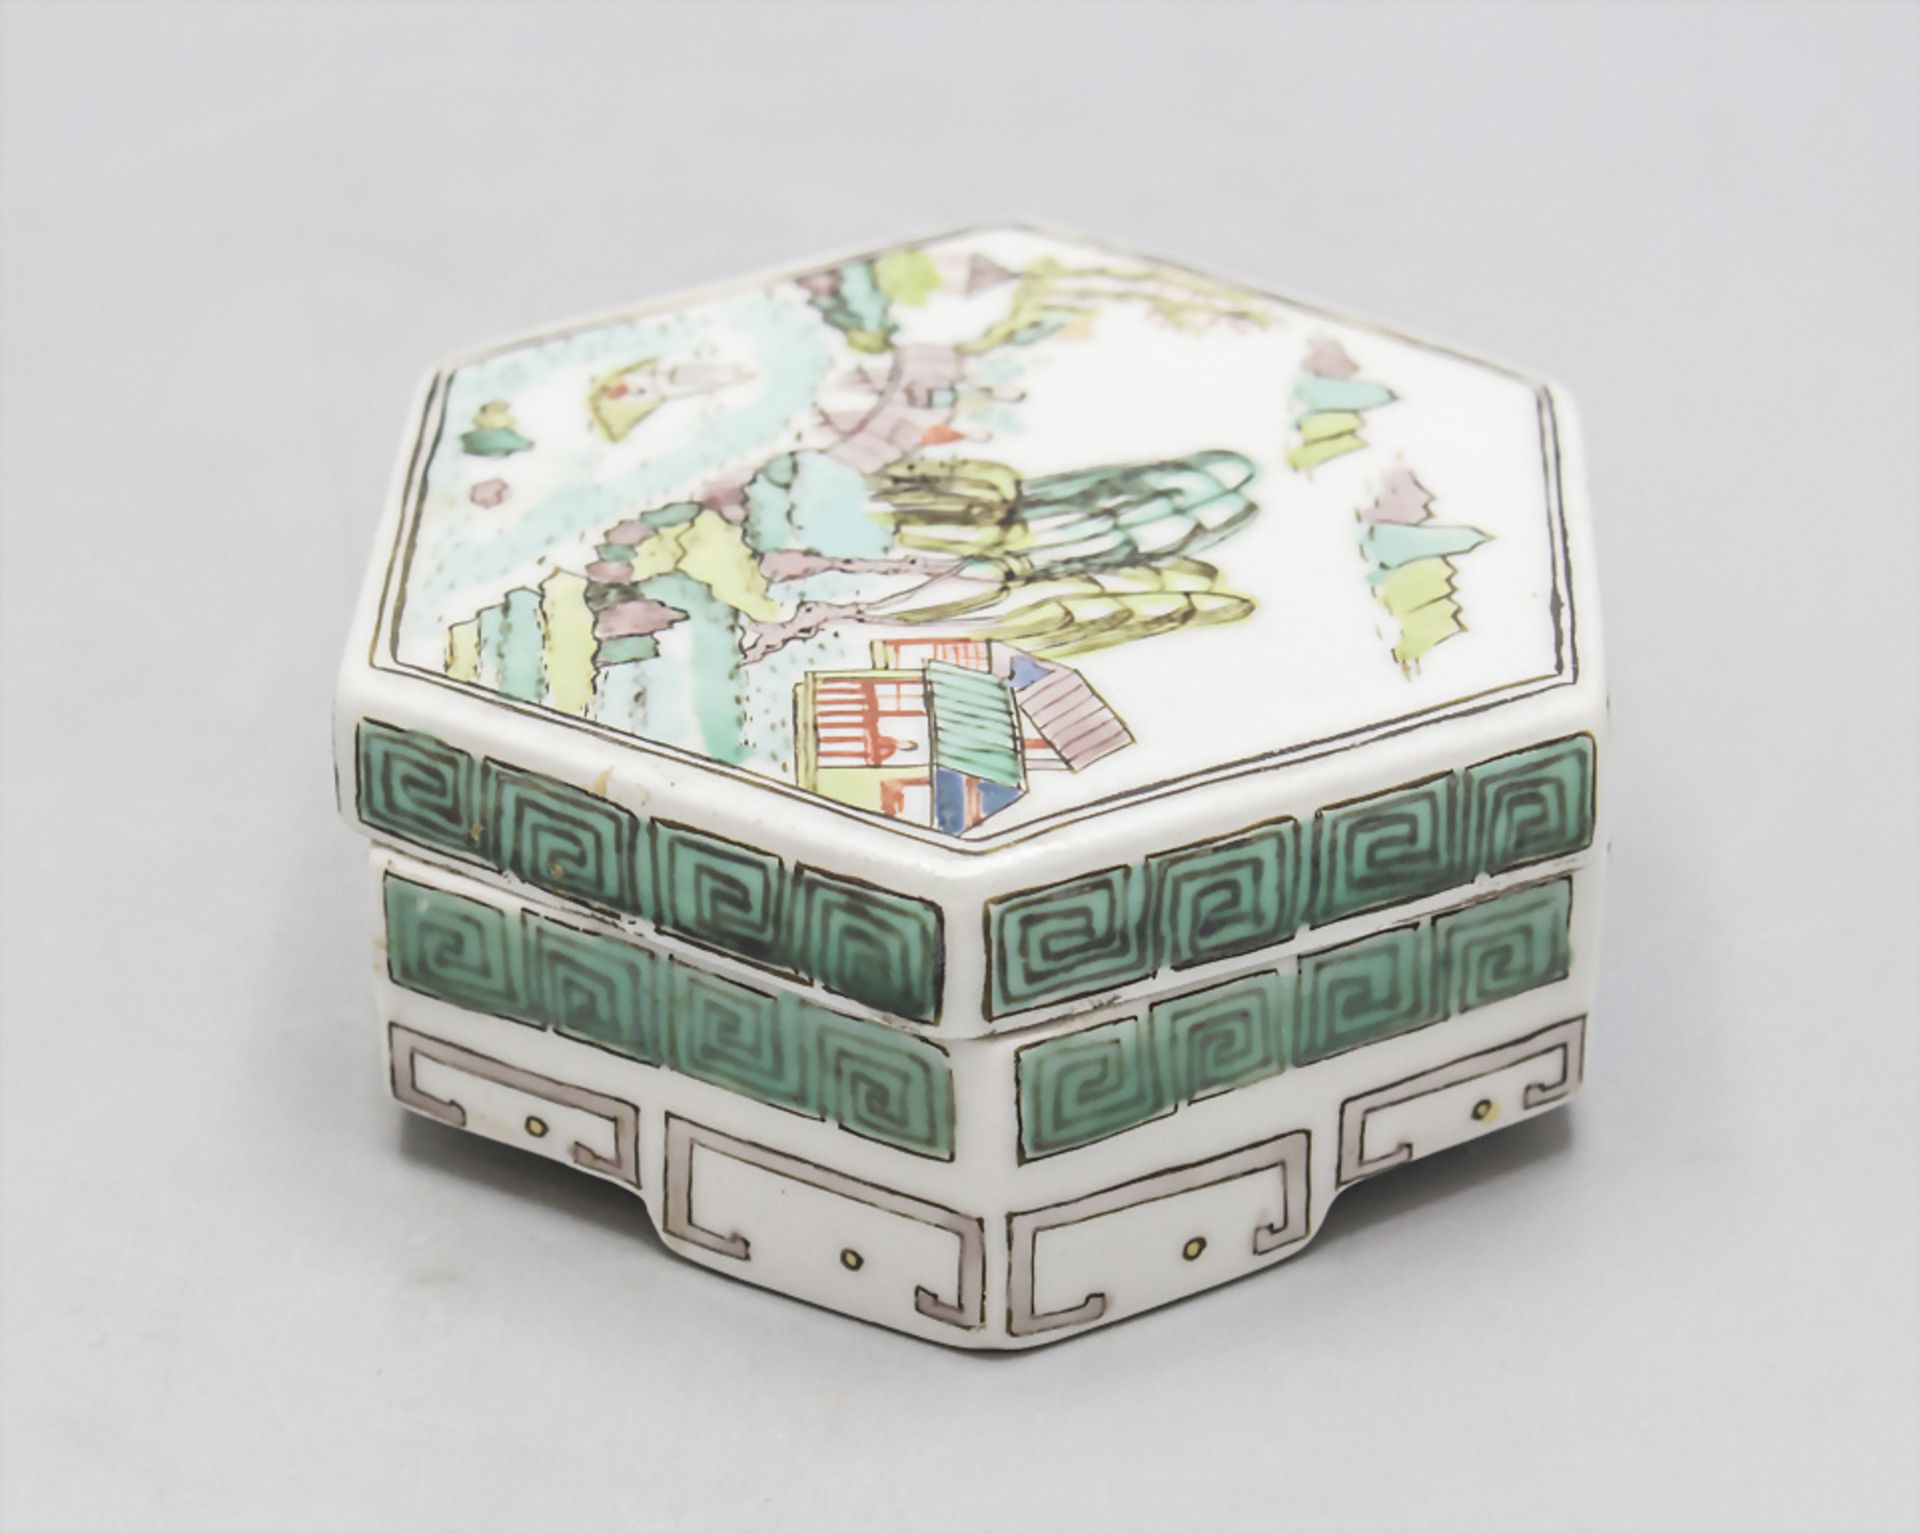 Deckeldose / A lidded porcelain box, China, Qing-Dynastie (1644-1911), 18./19. Jh. - Image 4 of 6